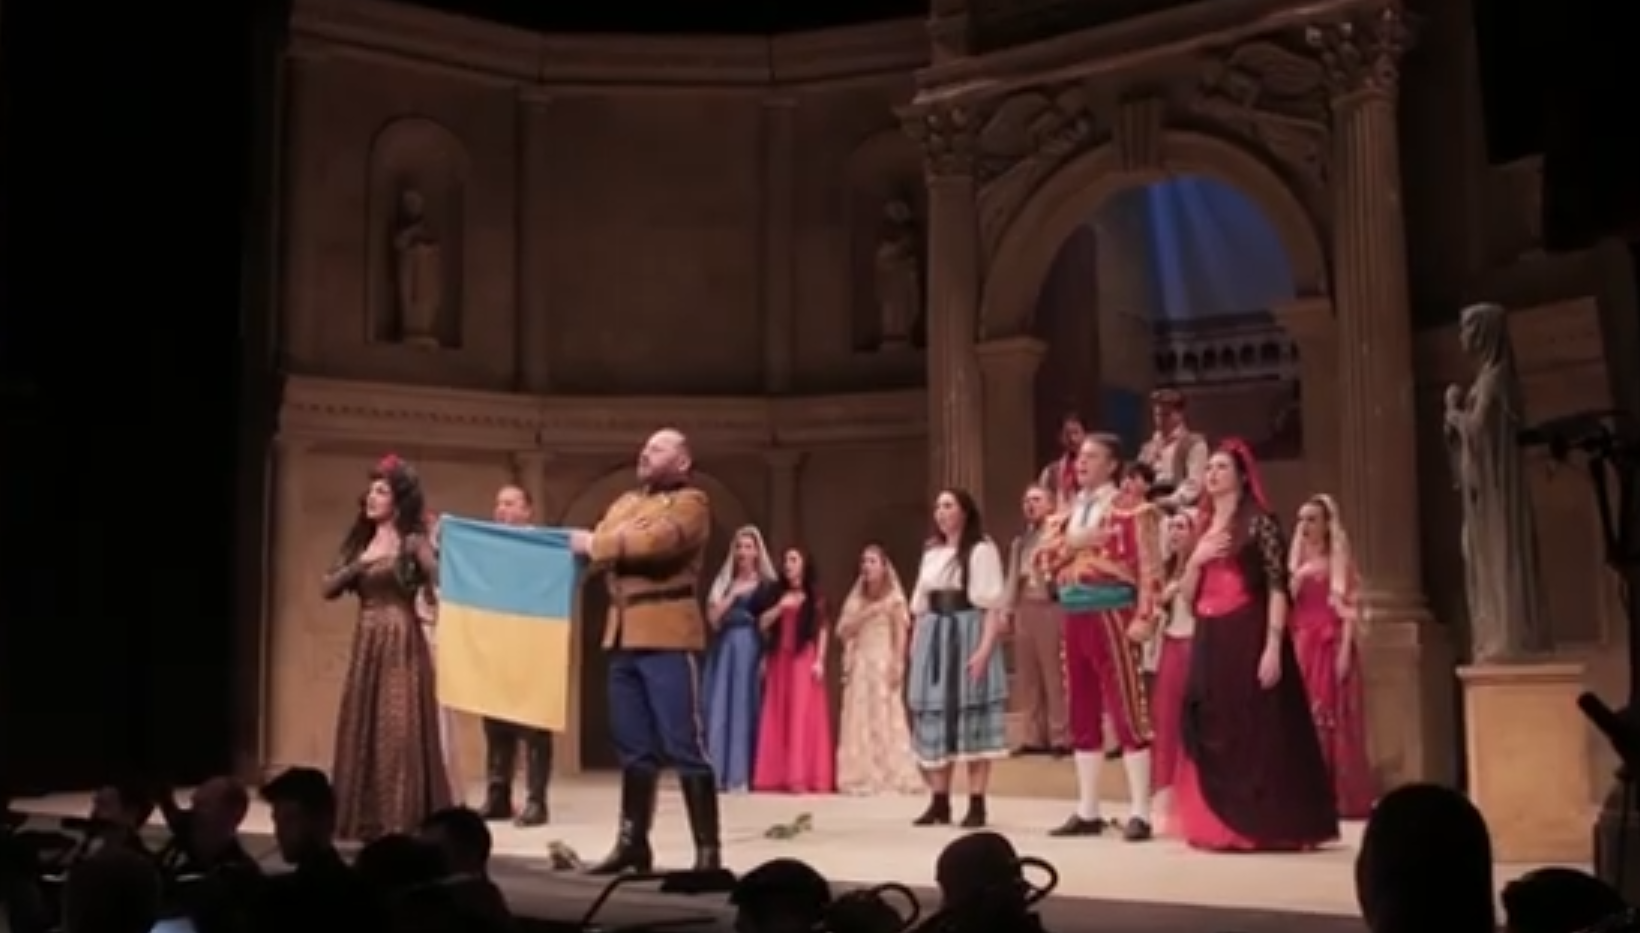 Ukrainian Opera at Theatre Royal Brighton